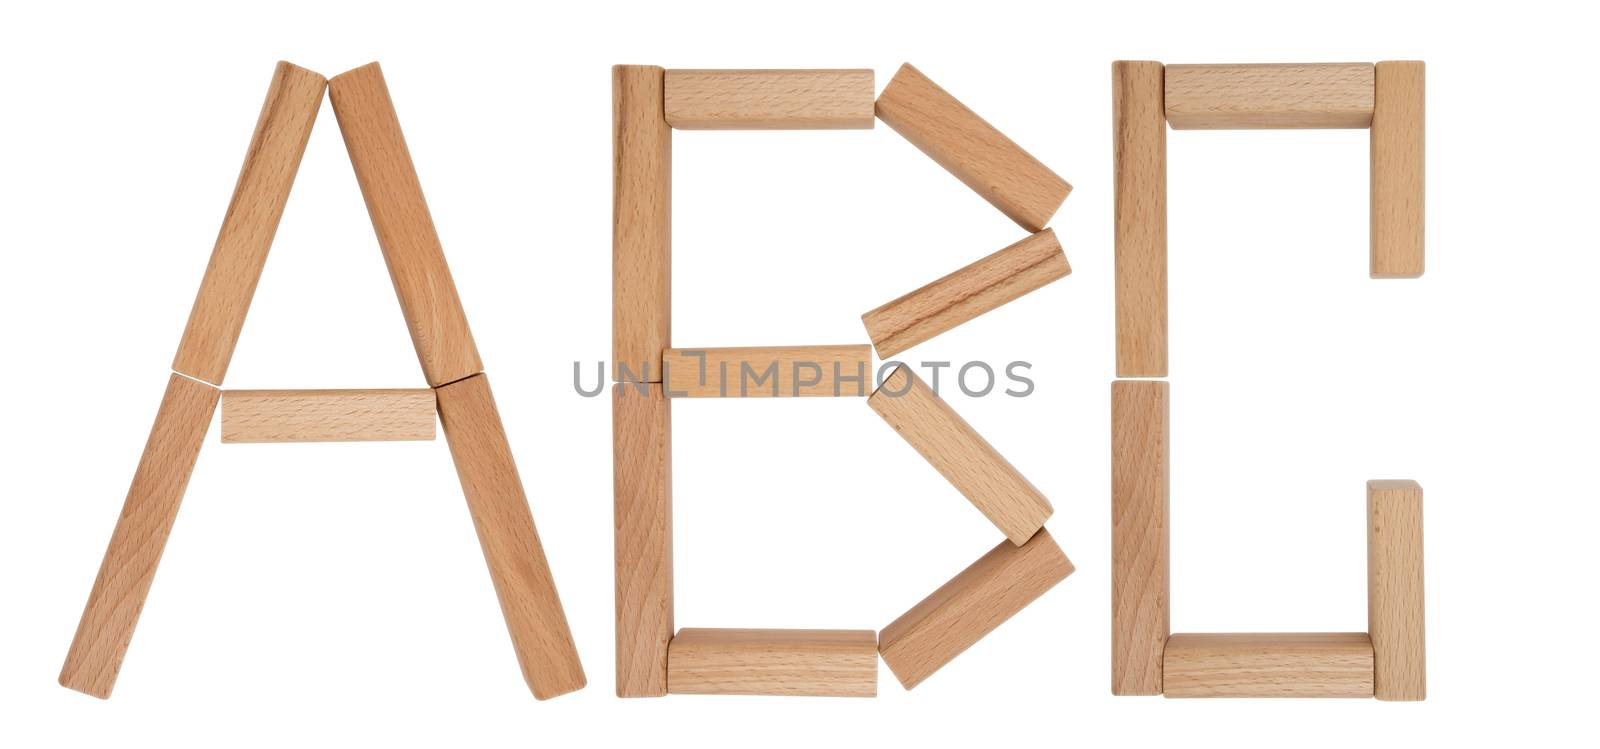 Wooden blocks - ABC by Venakr